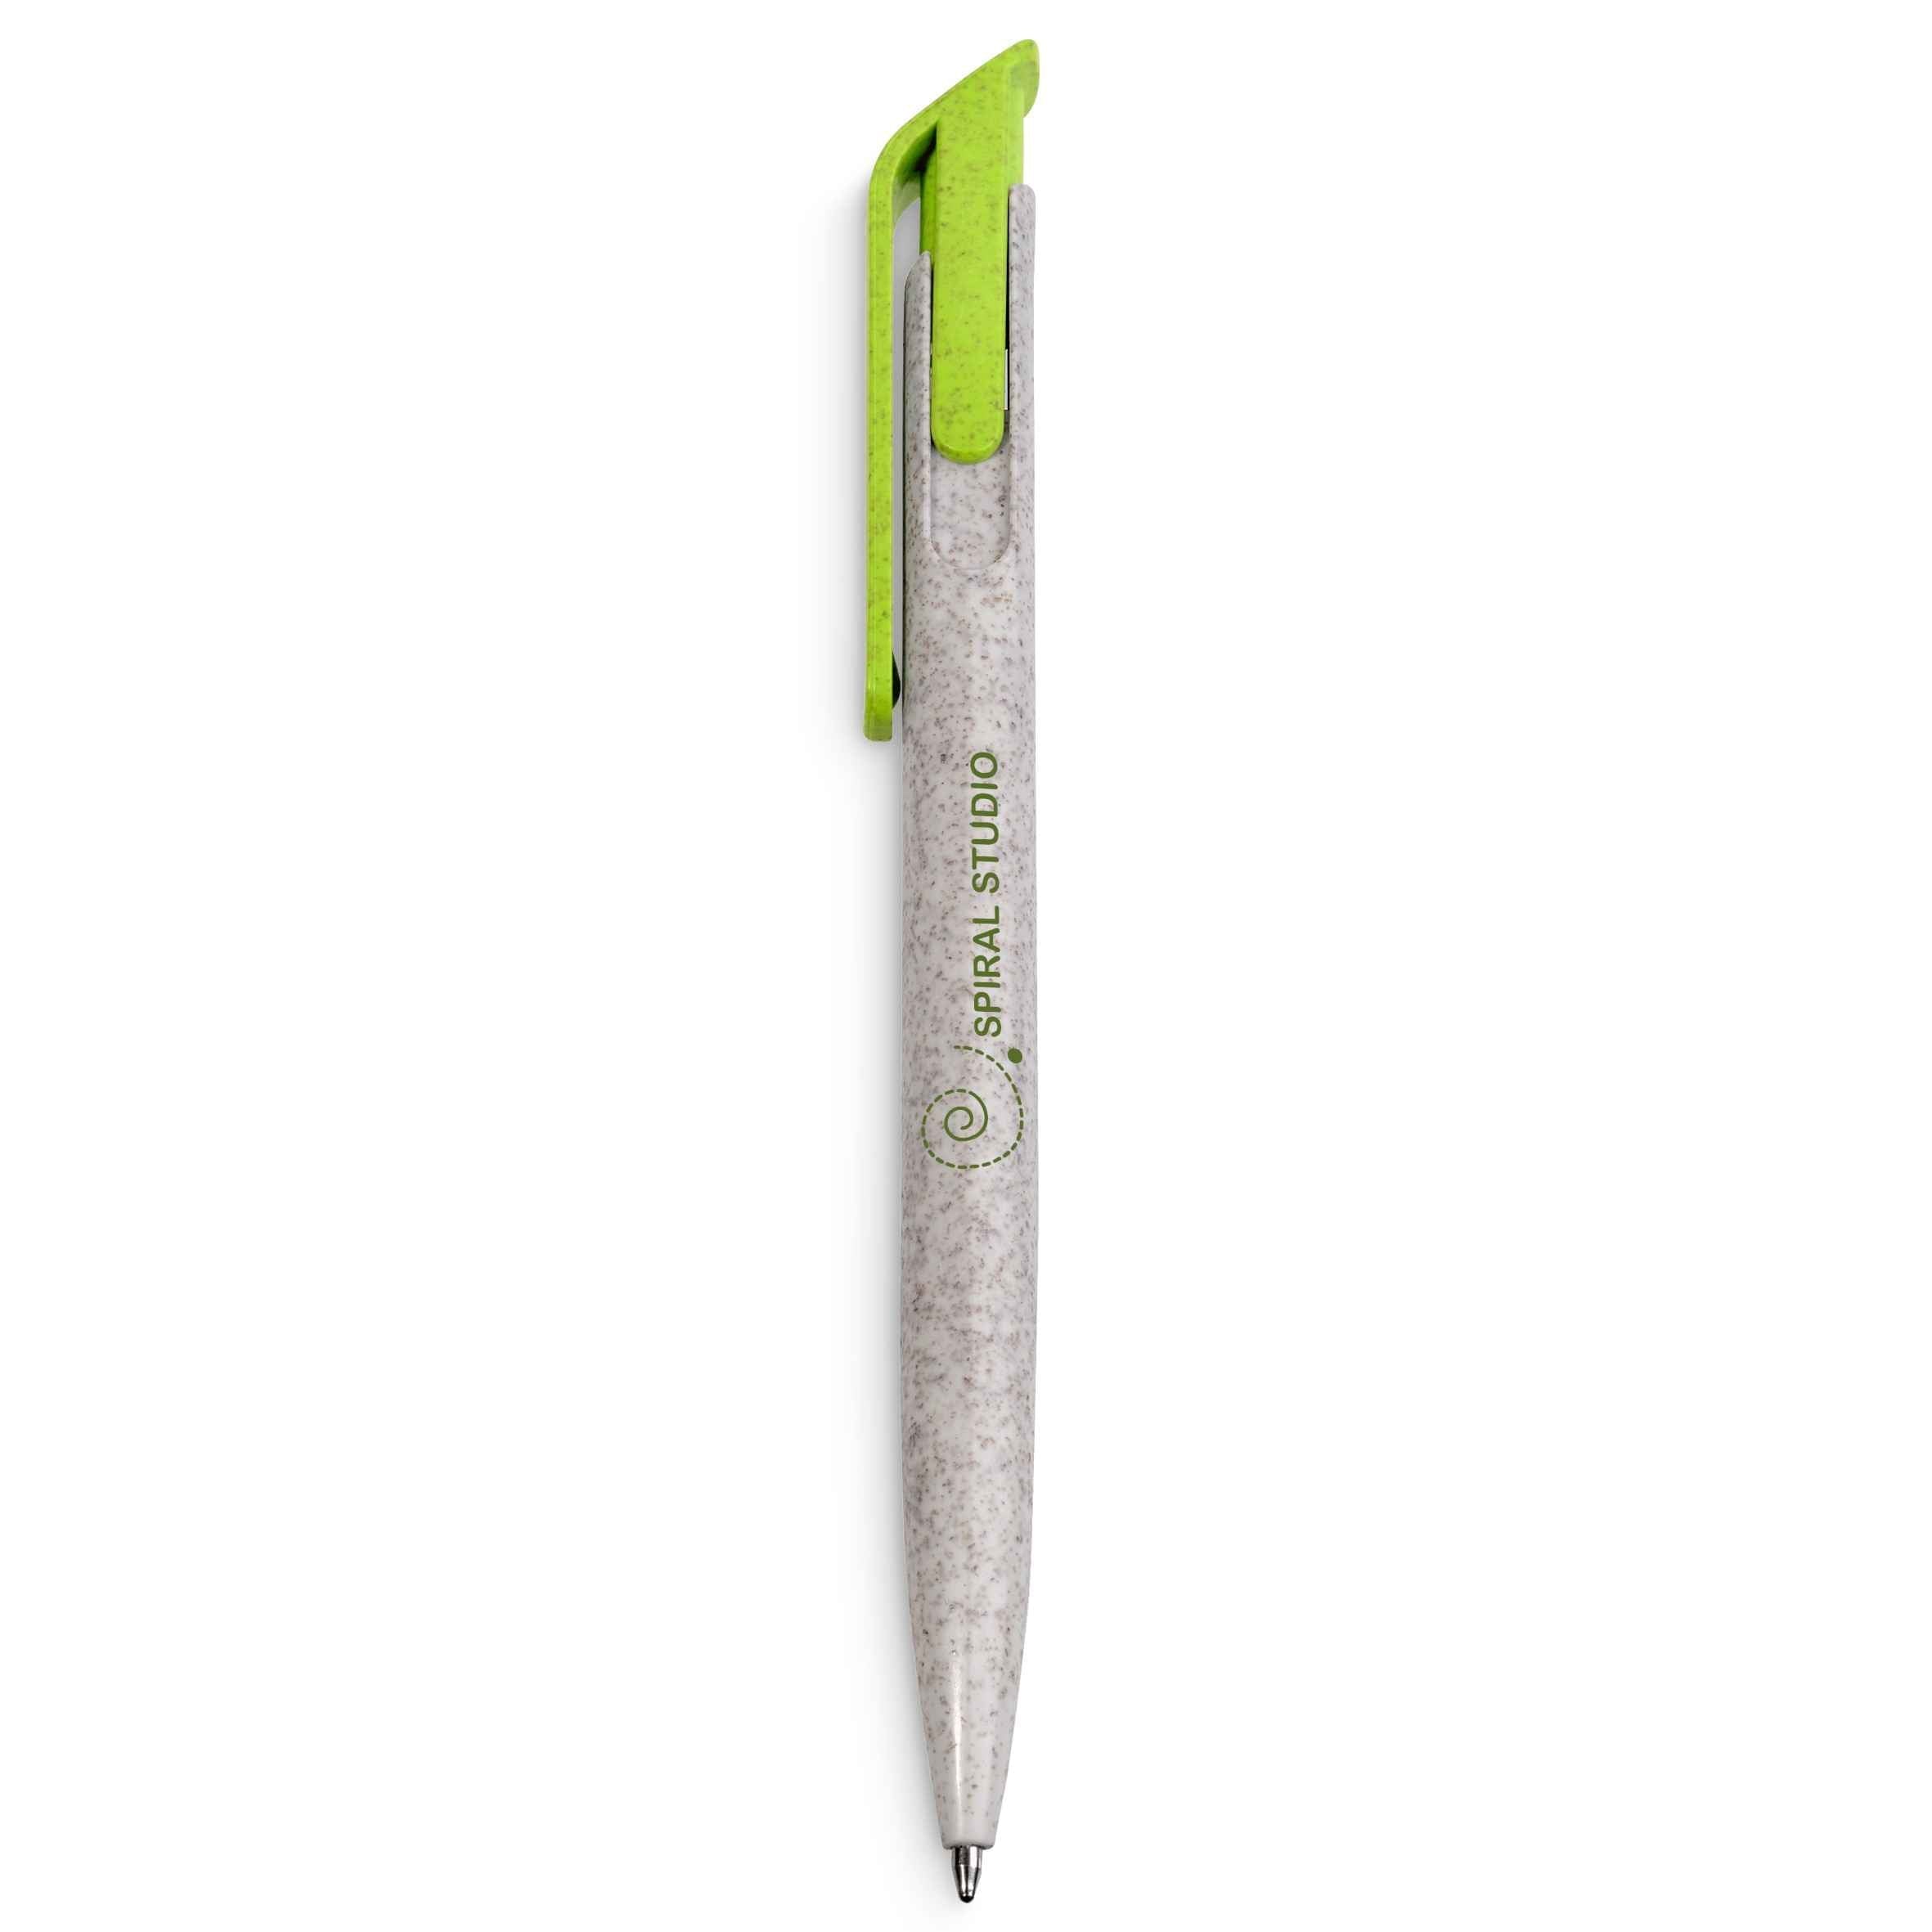 A wheat straw environmentally friendly pen shown in a lime colour